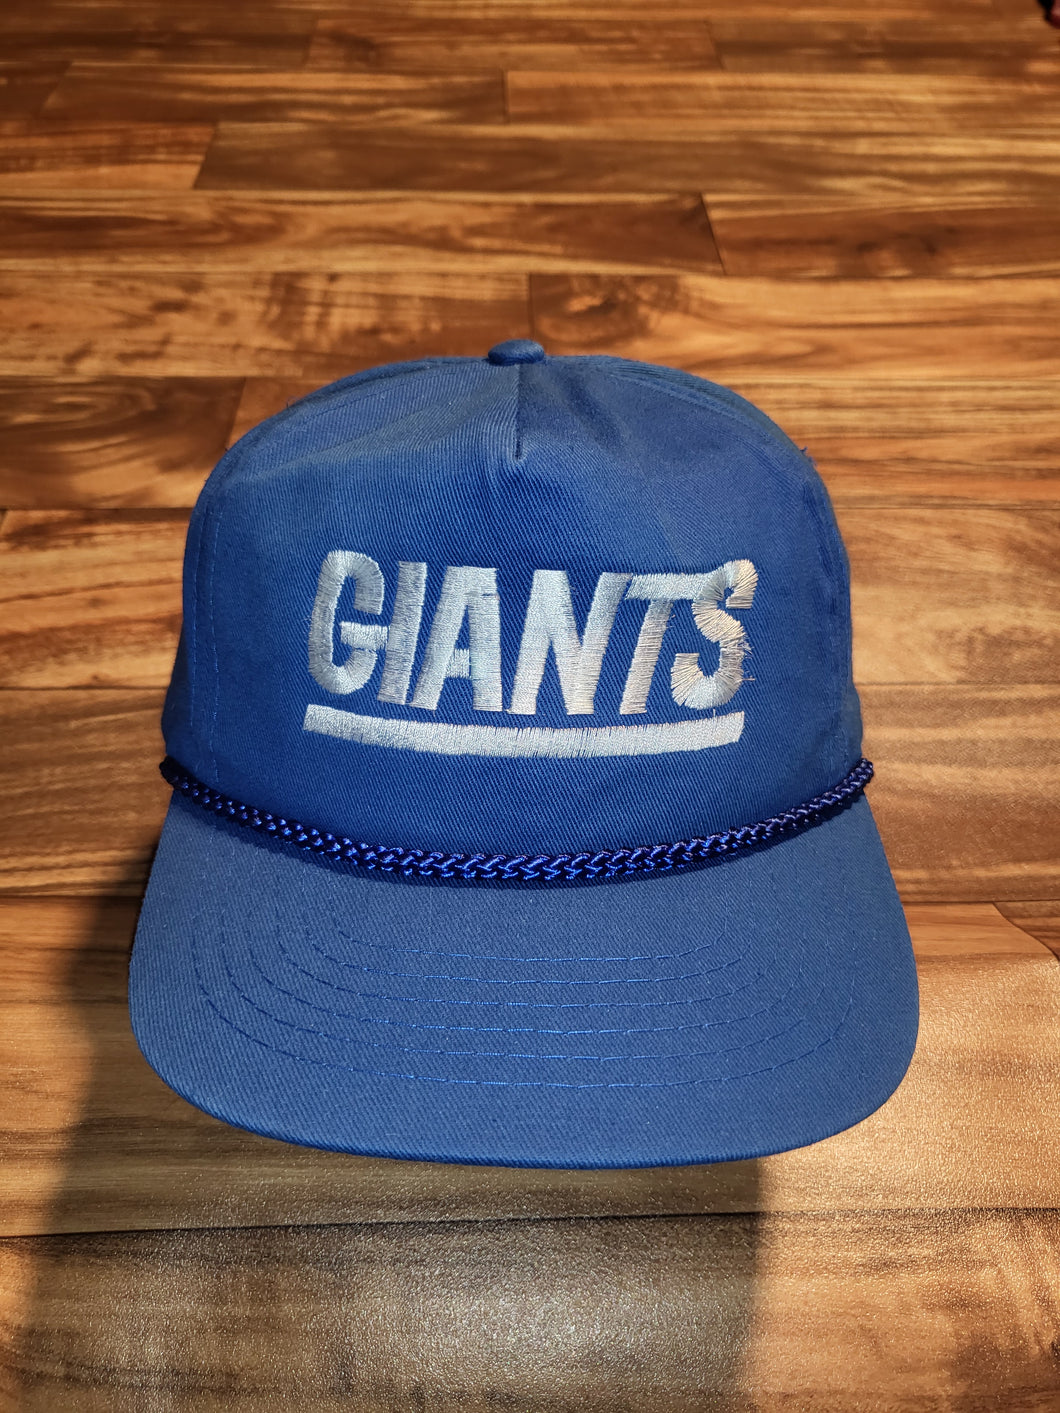 Vintage New York Giants NFL Sports Hat